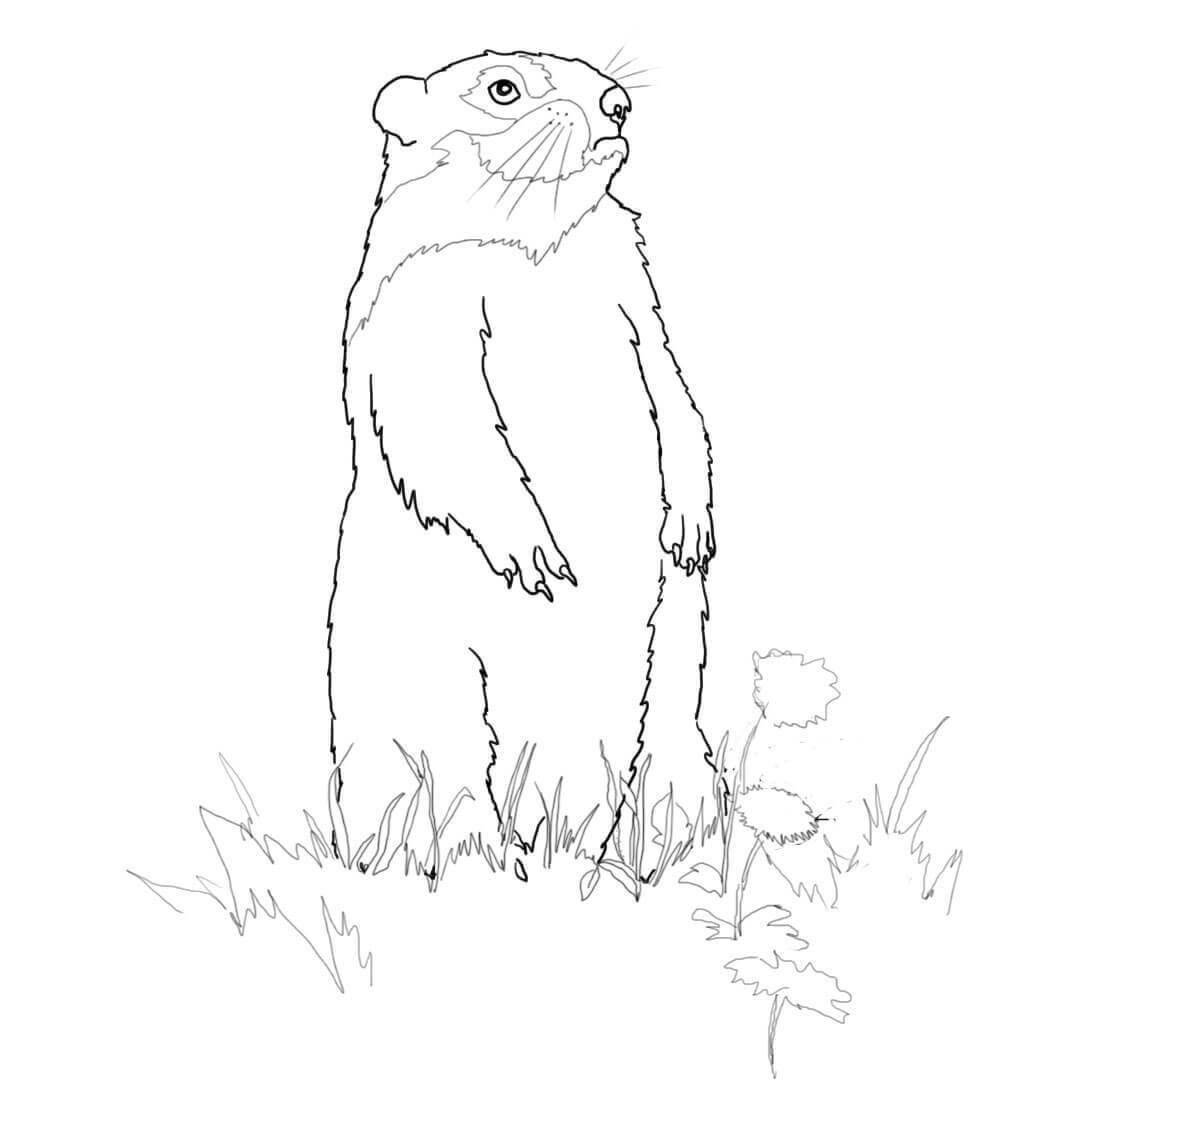 Marmot #2